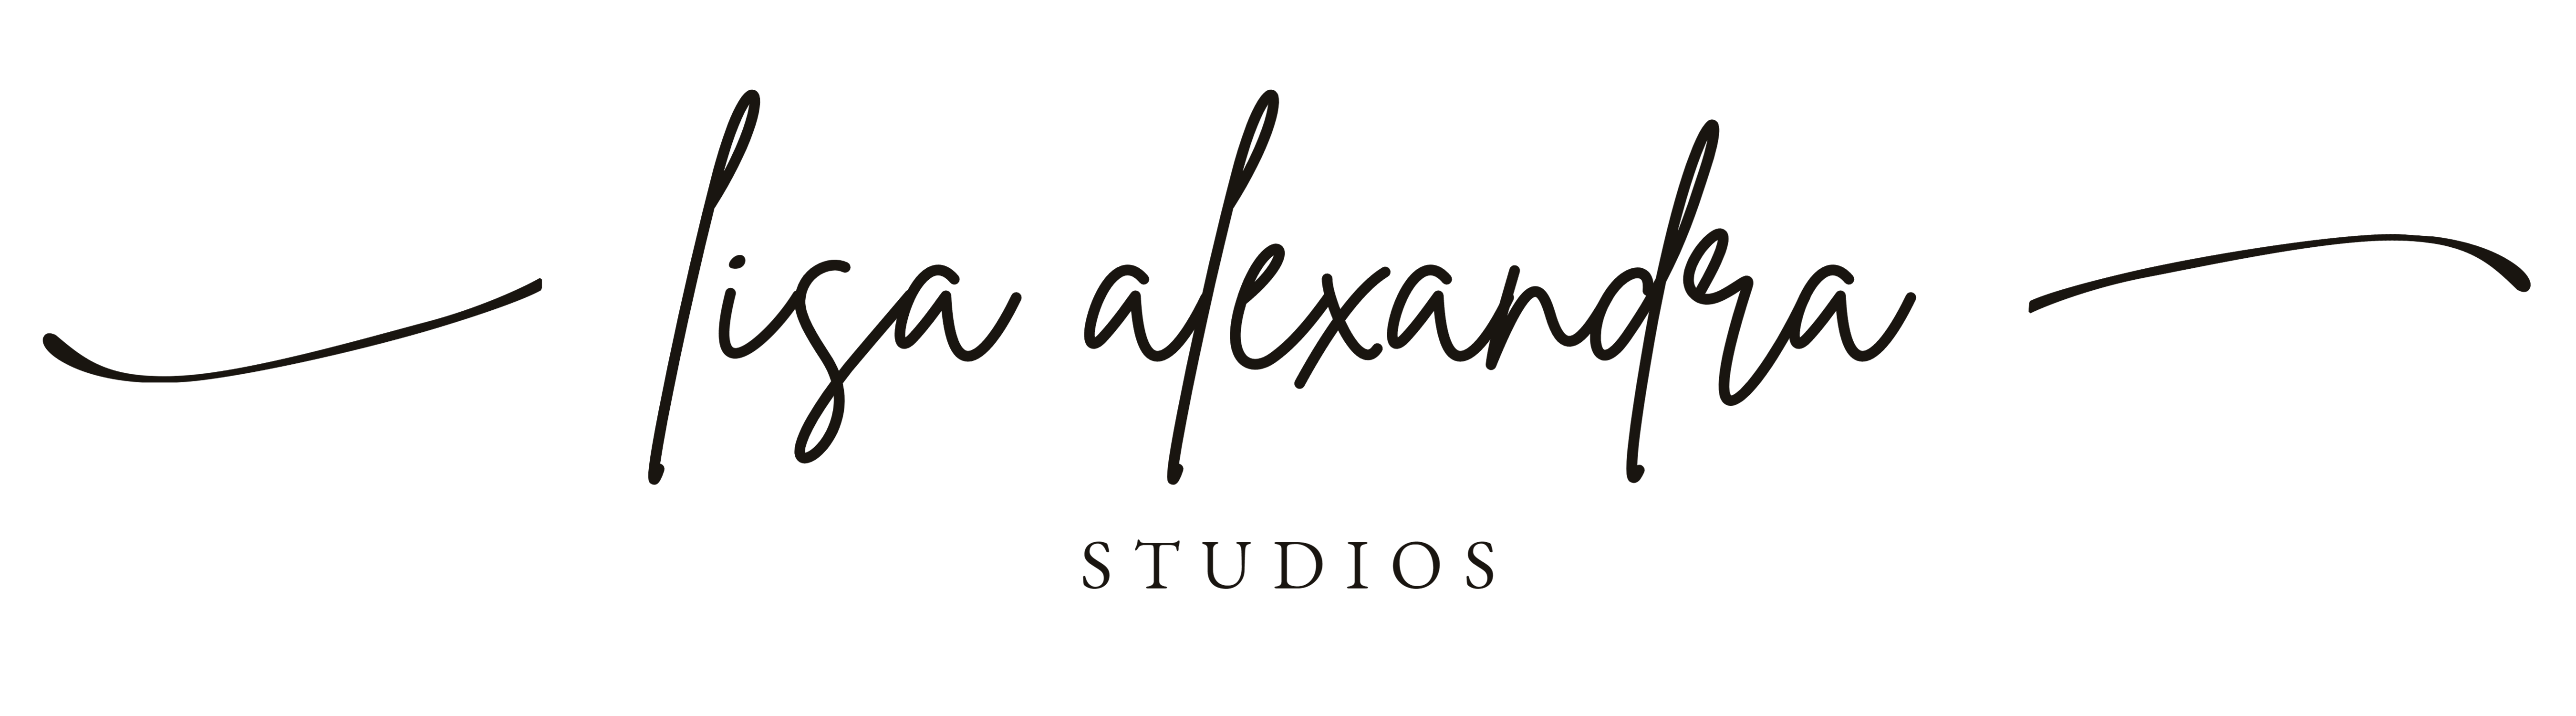 Lisa Alexandra Studios